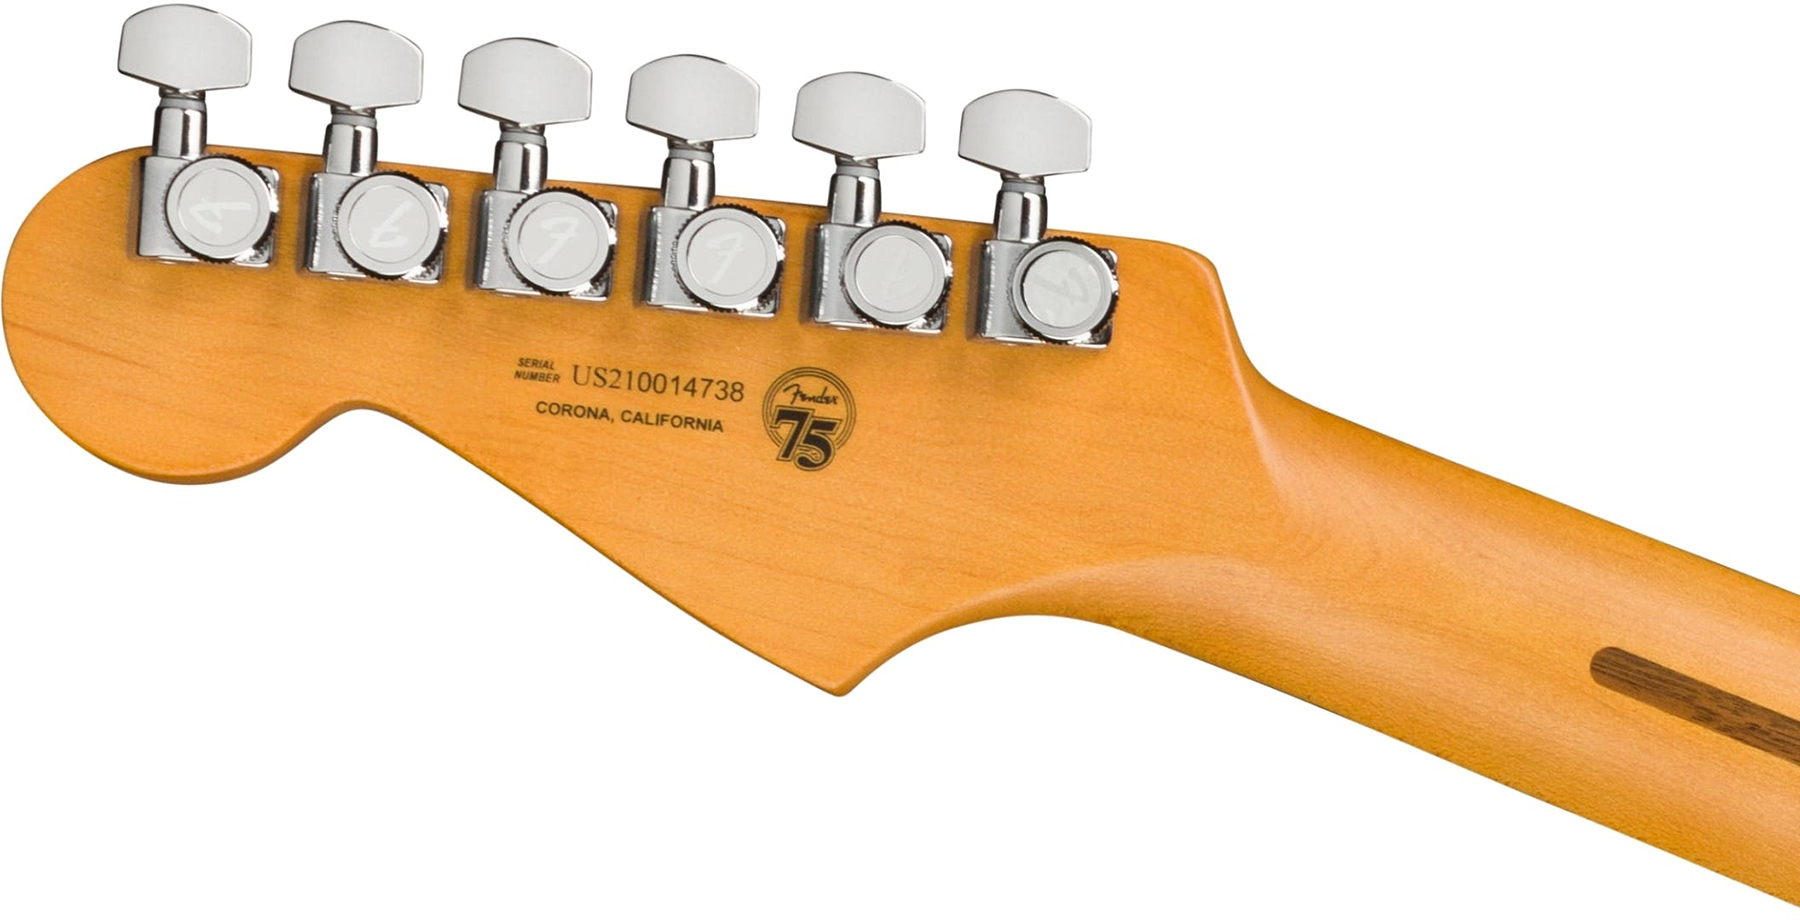 Fender Strat American Ultra Ltd Usa 3s Trem Eb - Quicksilver - Str shape electric guitar - Variation 3